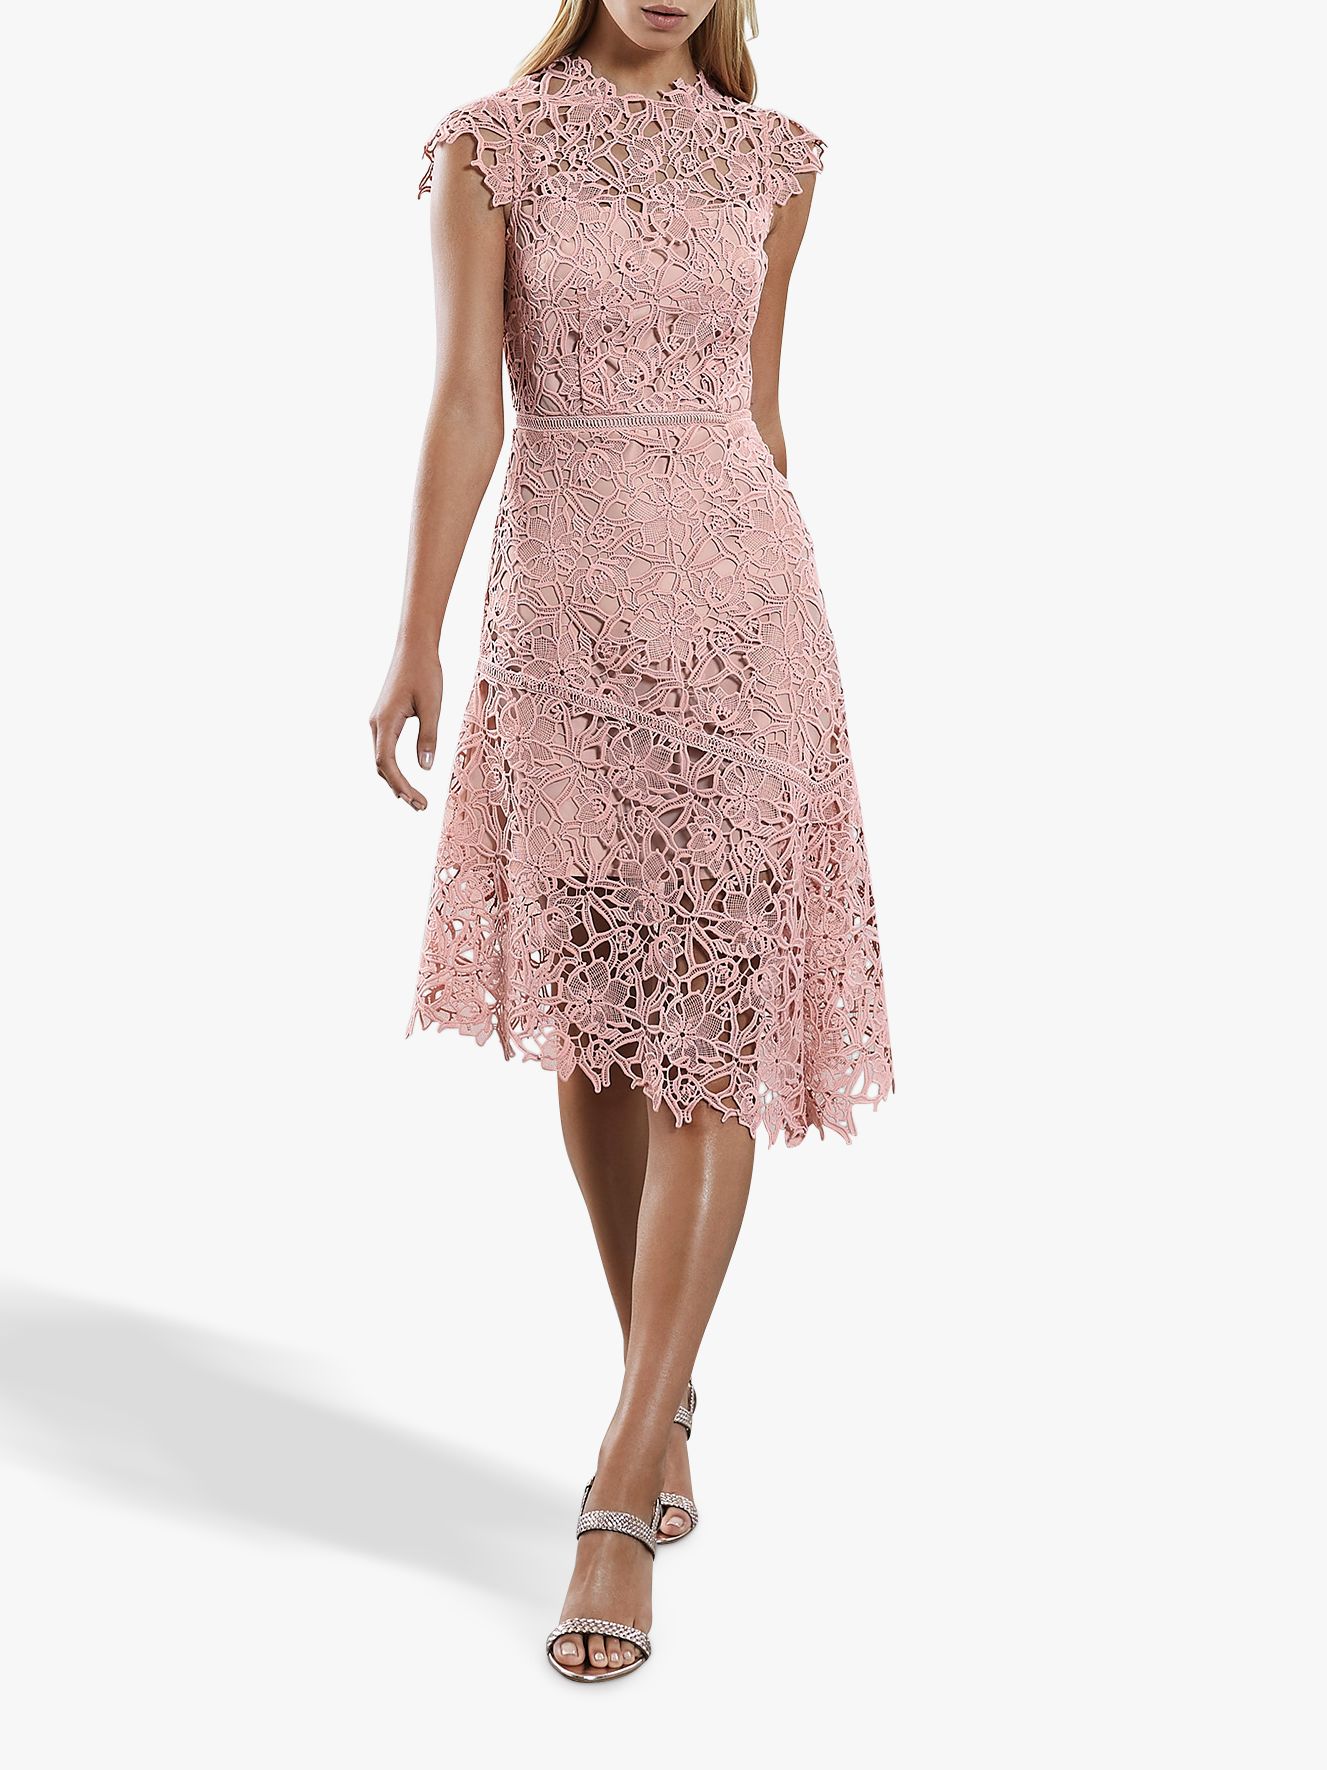 Reiss Ivana Lace Asymmetric Dress, Pale Pink at John Lewis & Partners